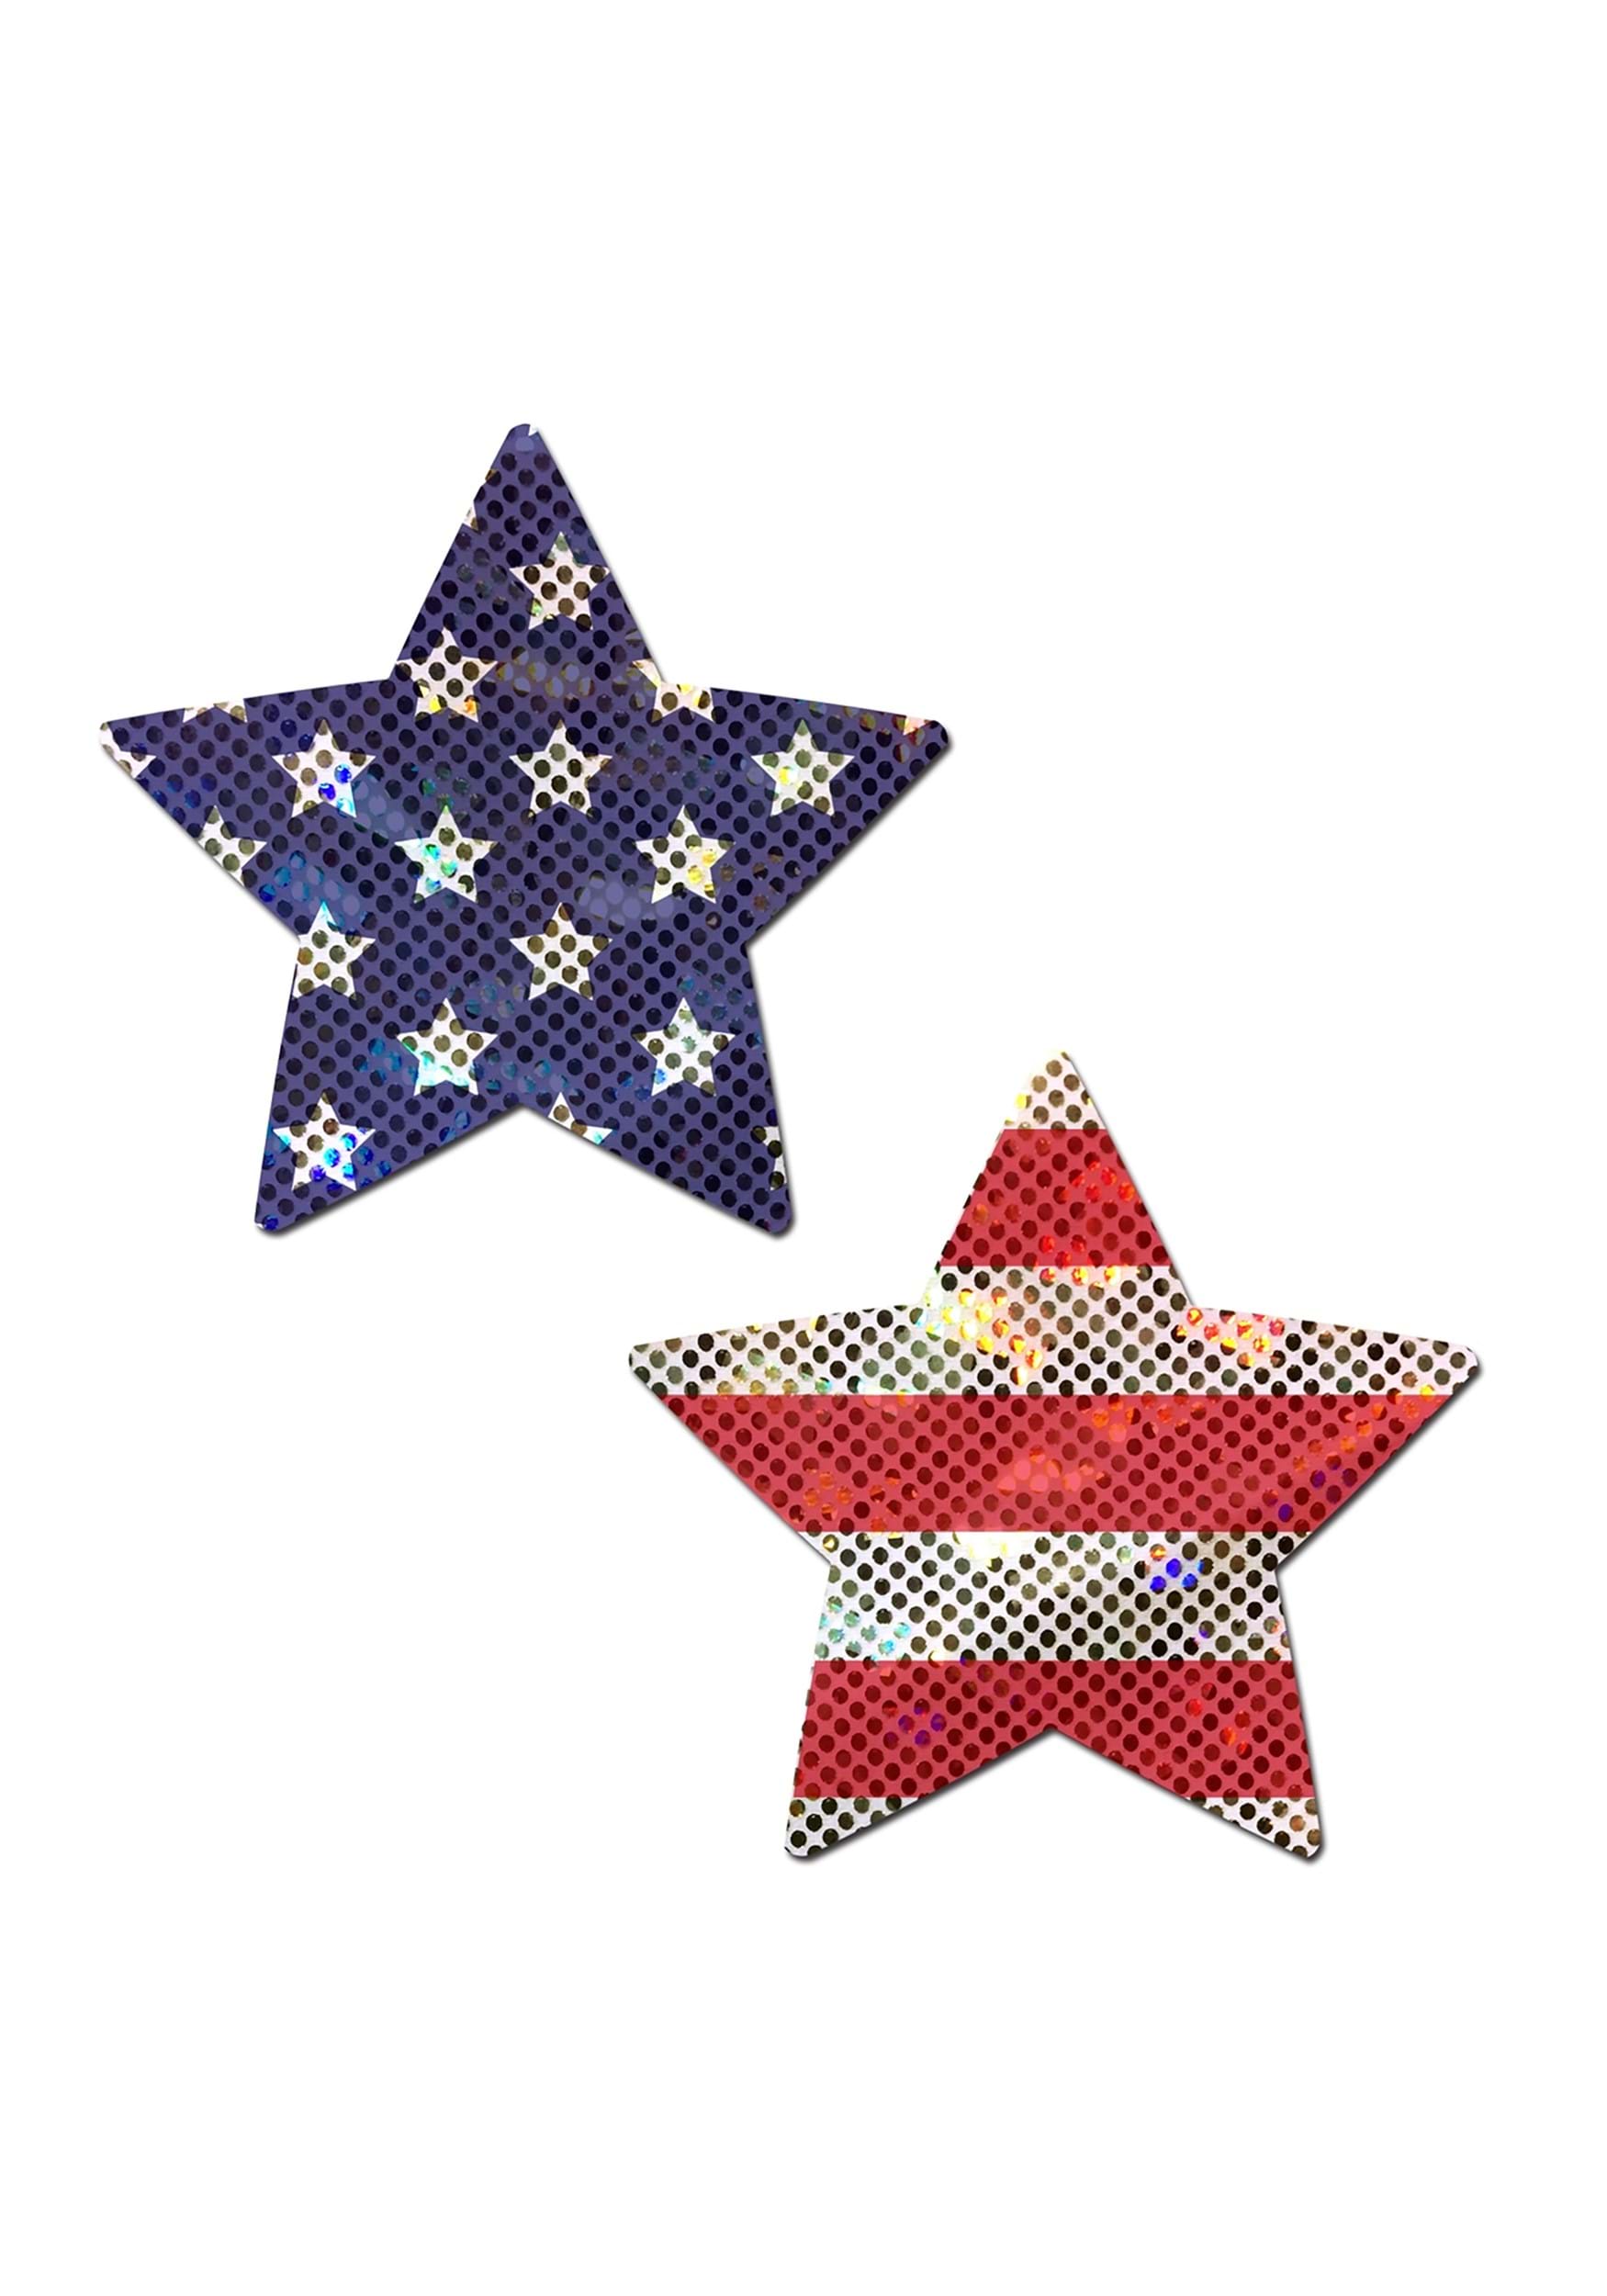 Pastease Glitter America Flag Pasties